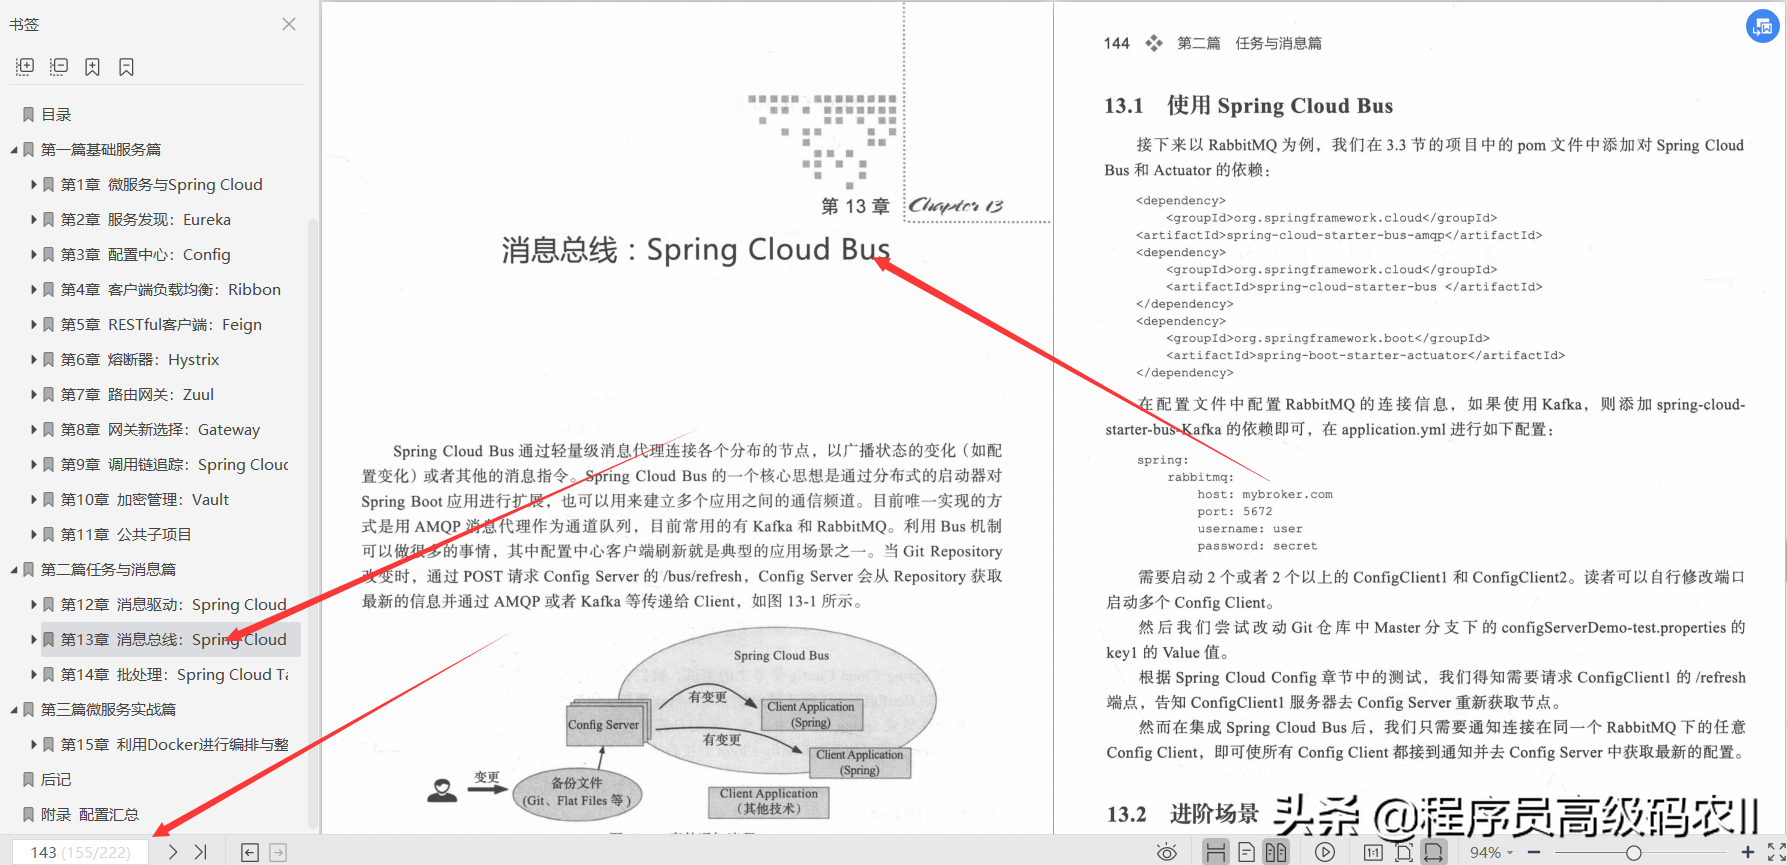 Minimalist springcloud actual documentation developed by Daniel's decades of development experience